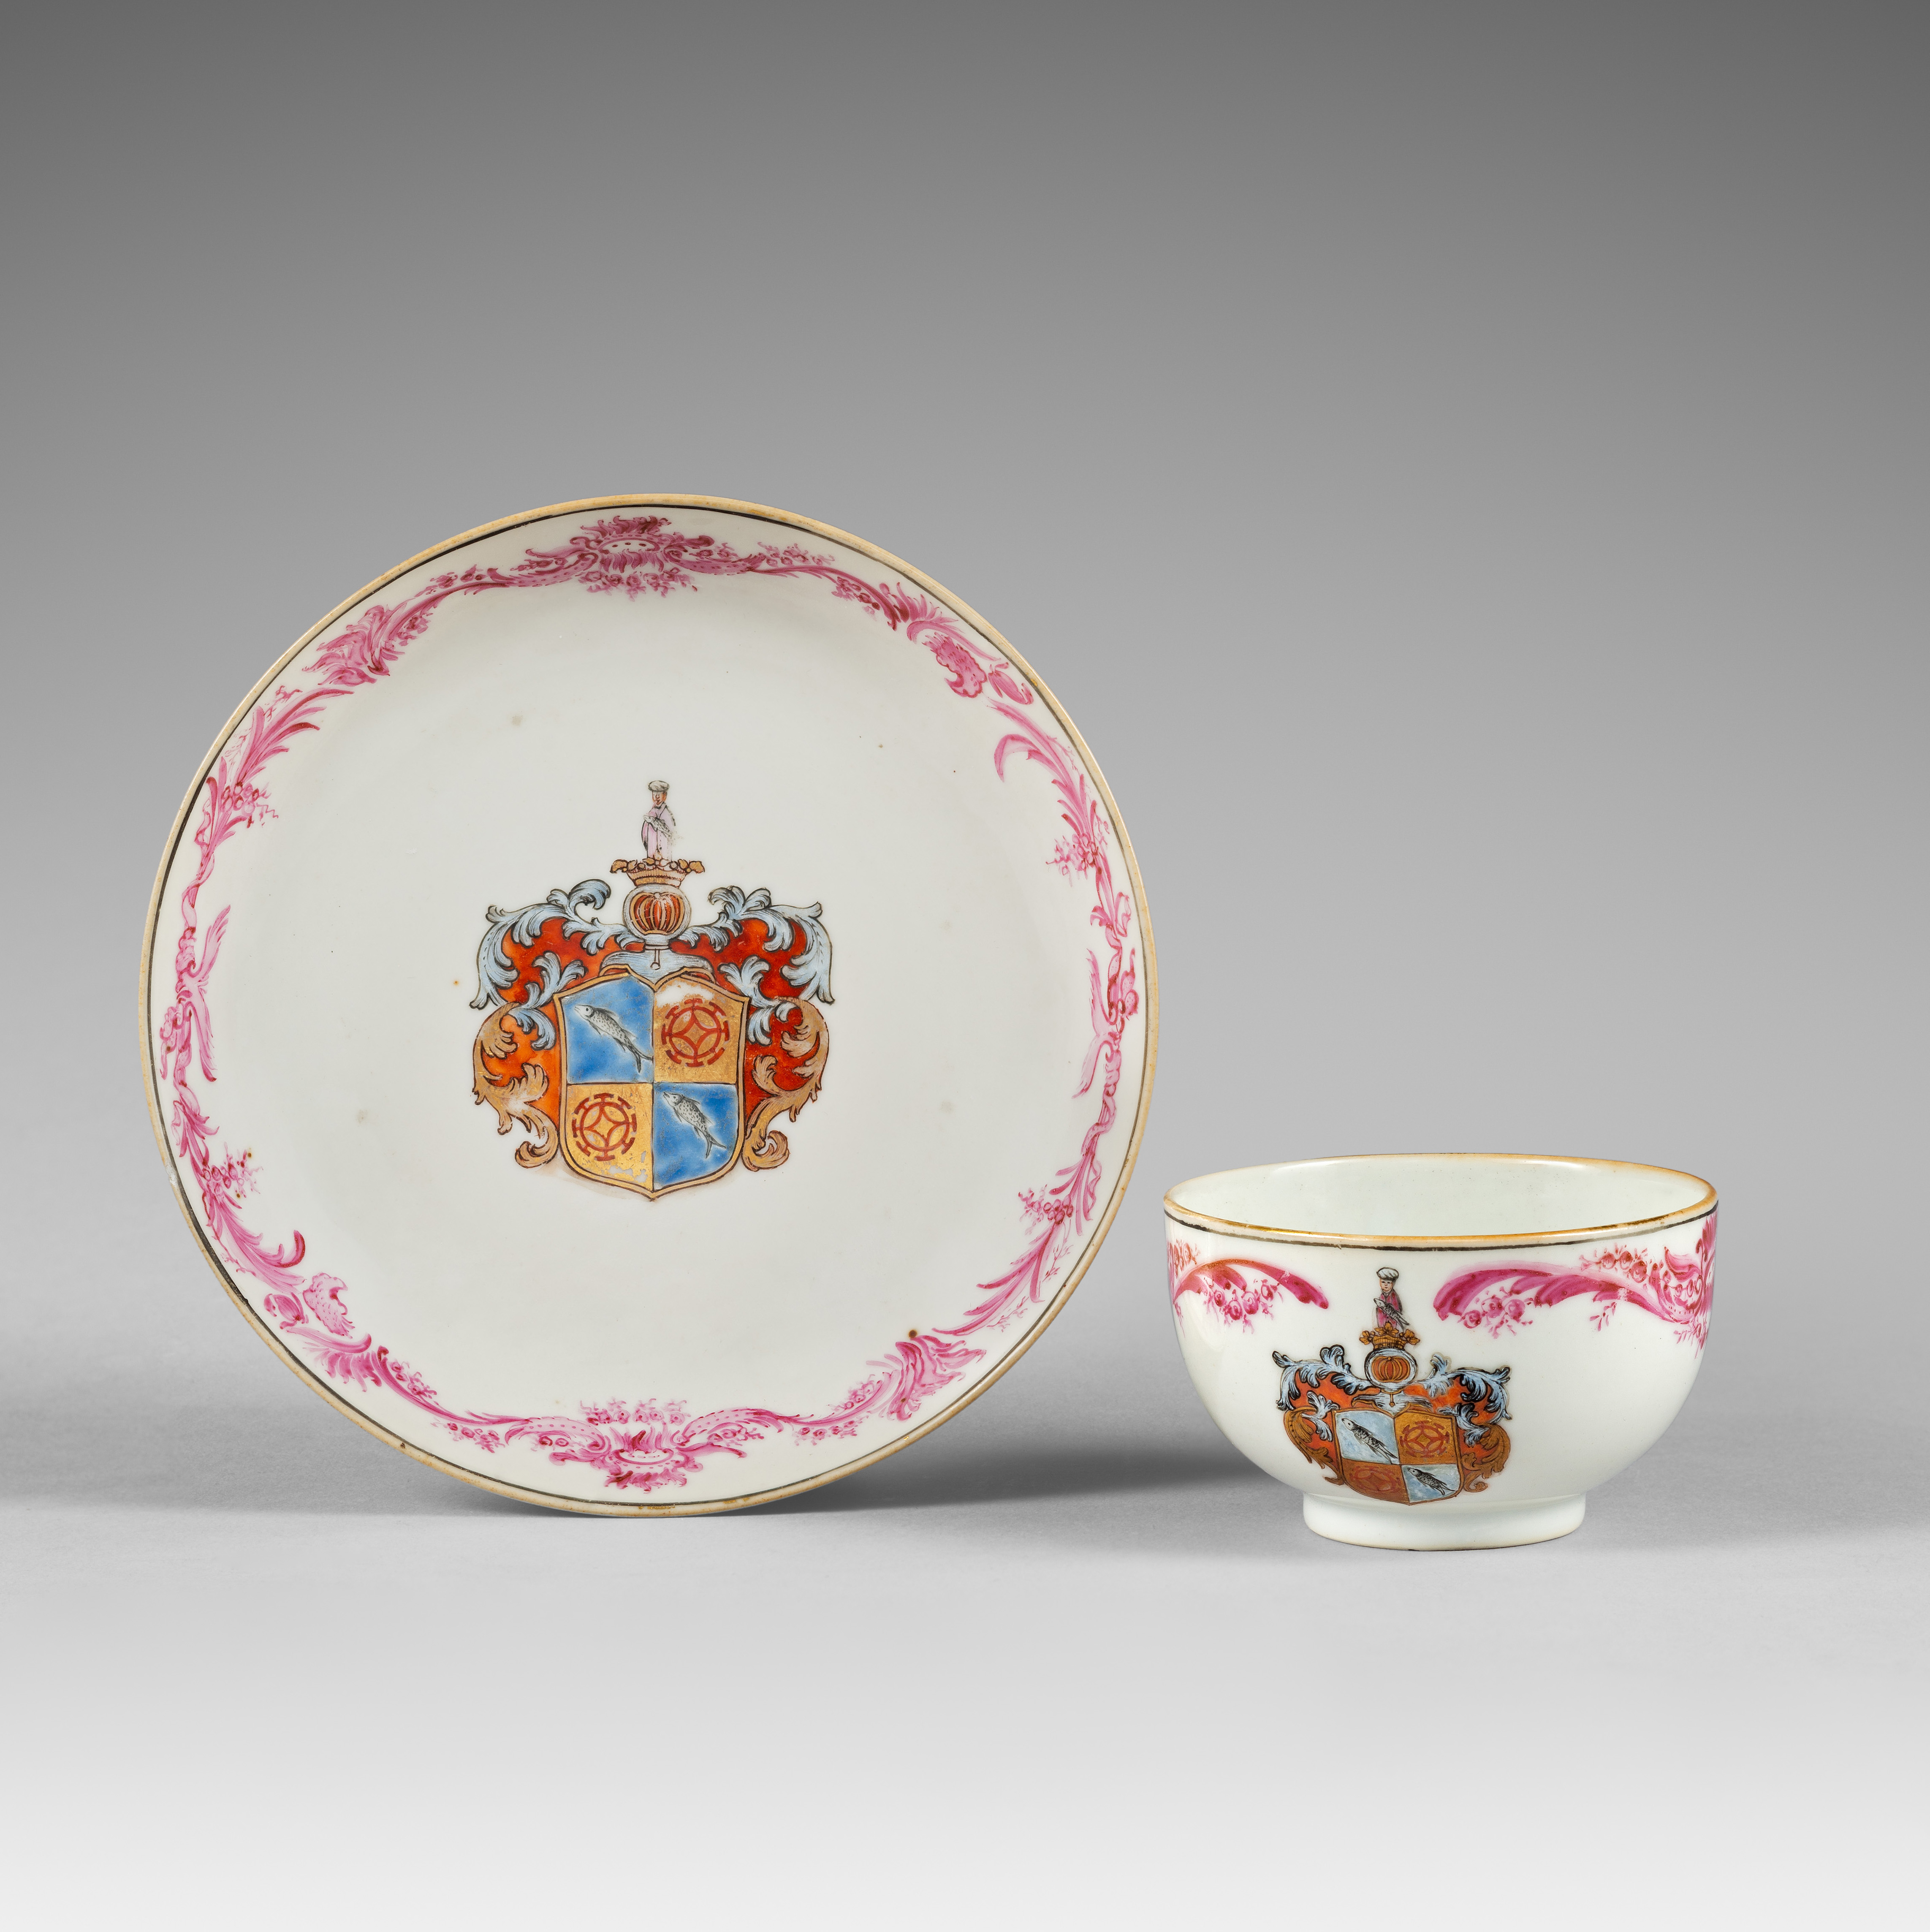 Porcelaine Qianlong (12736-1795), China